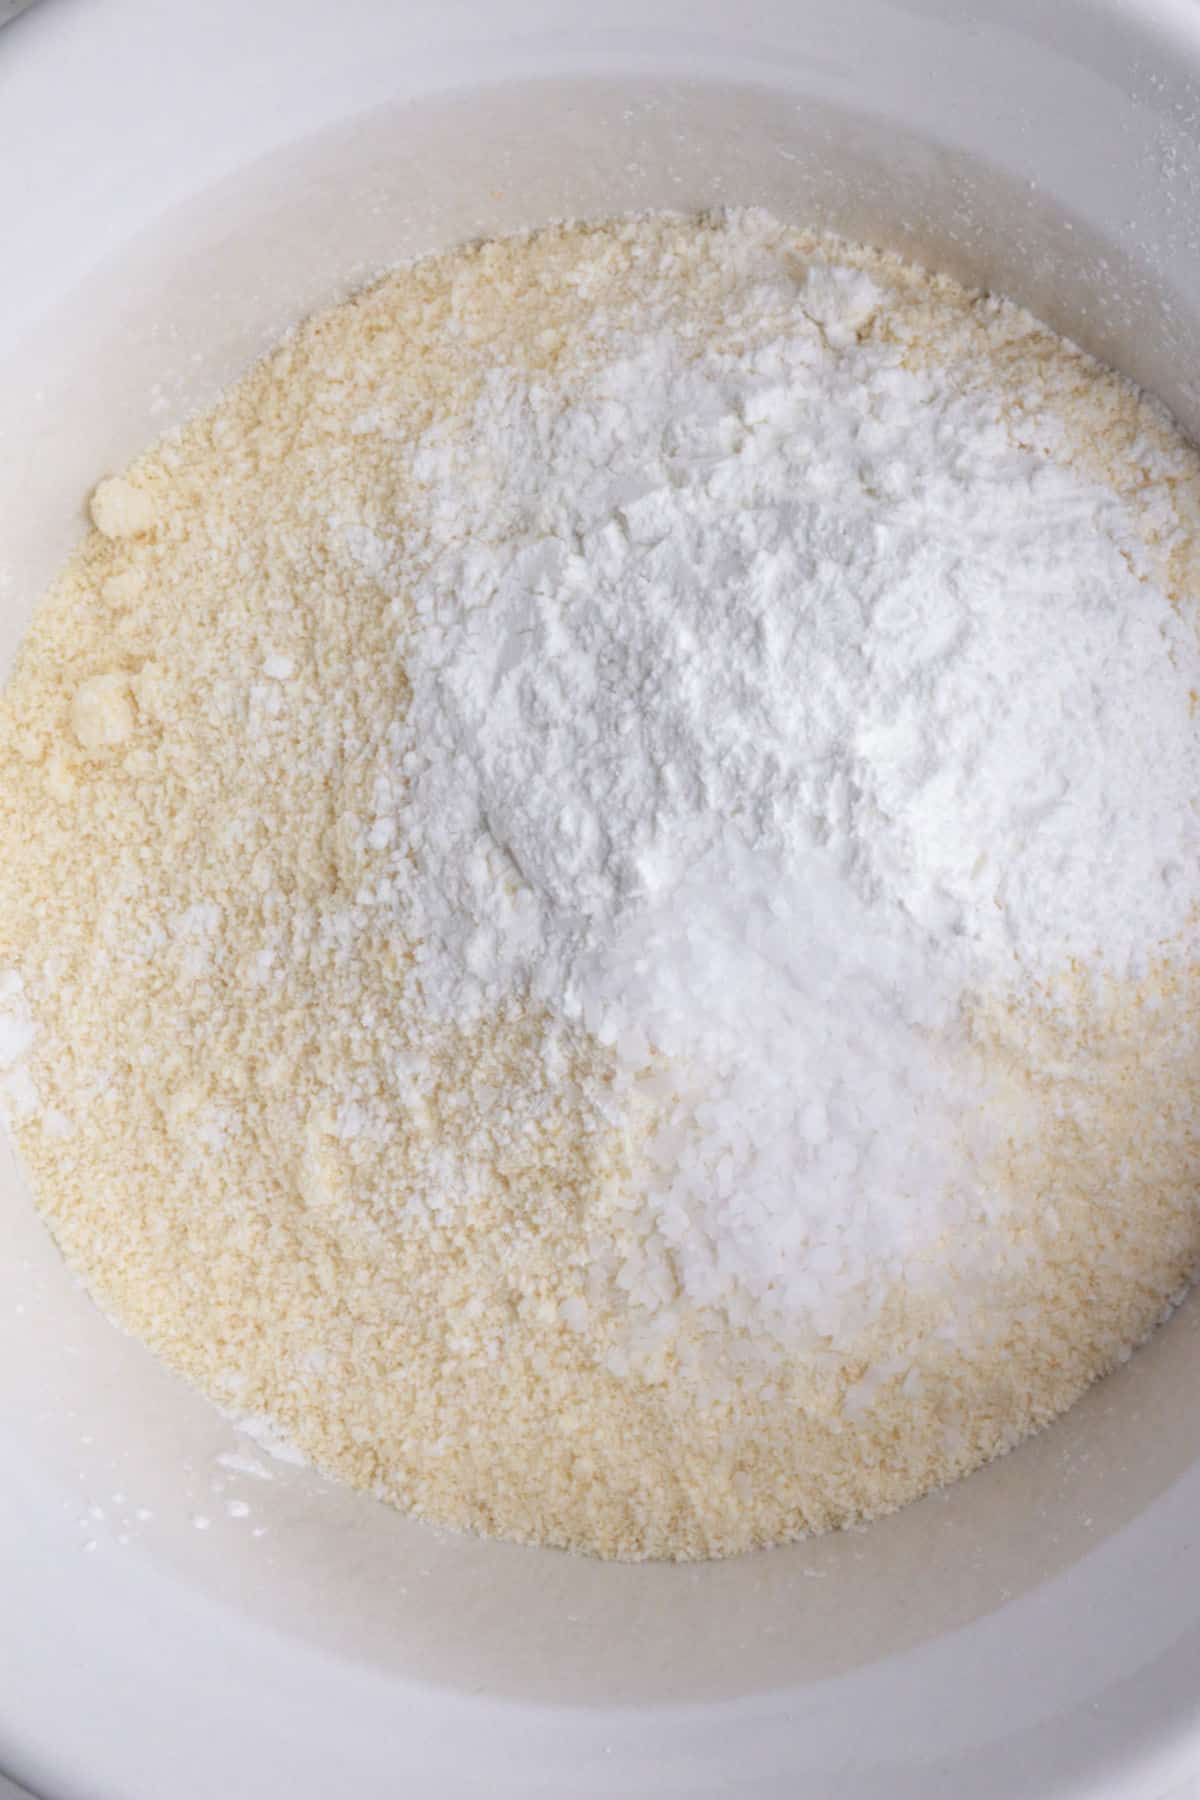 Dry ingredients for coconut flour cookies